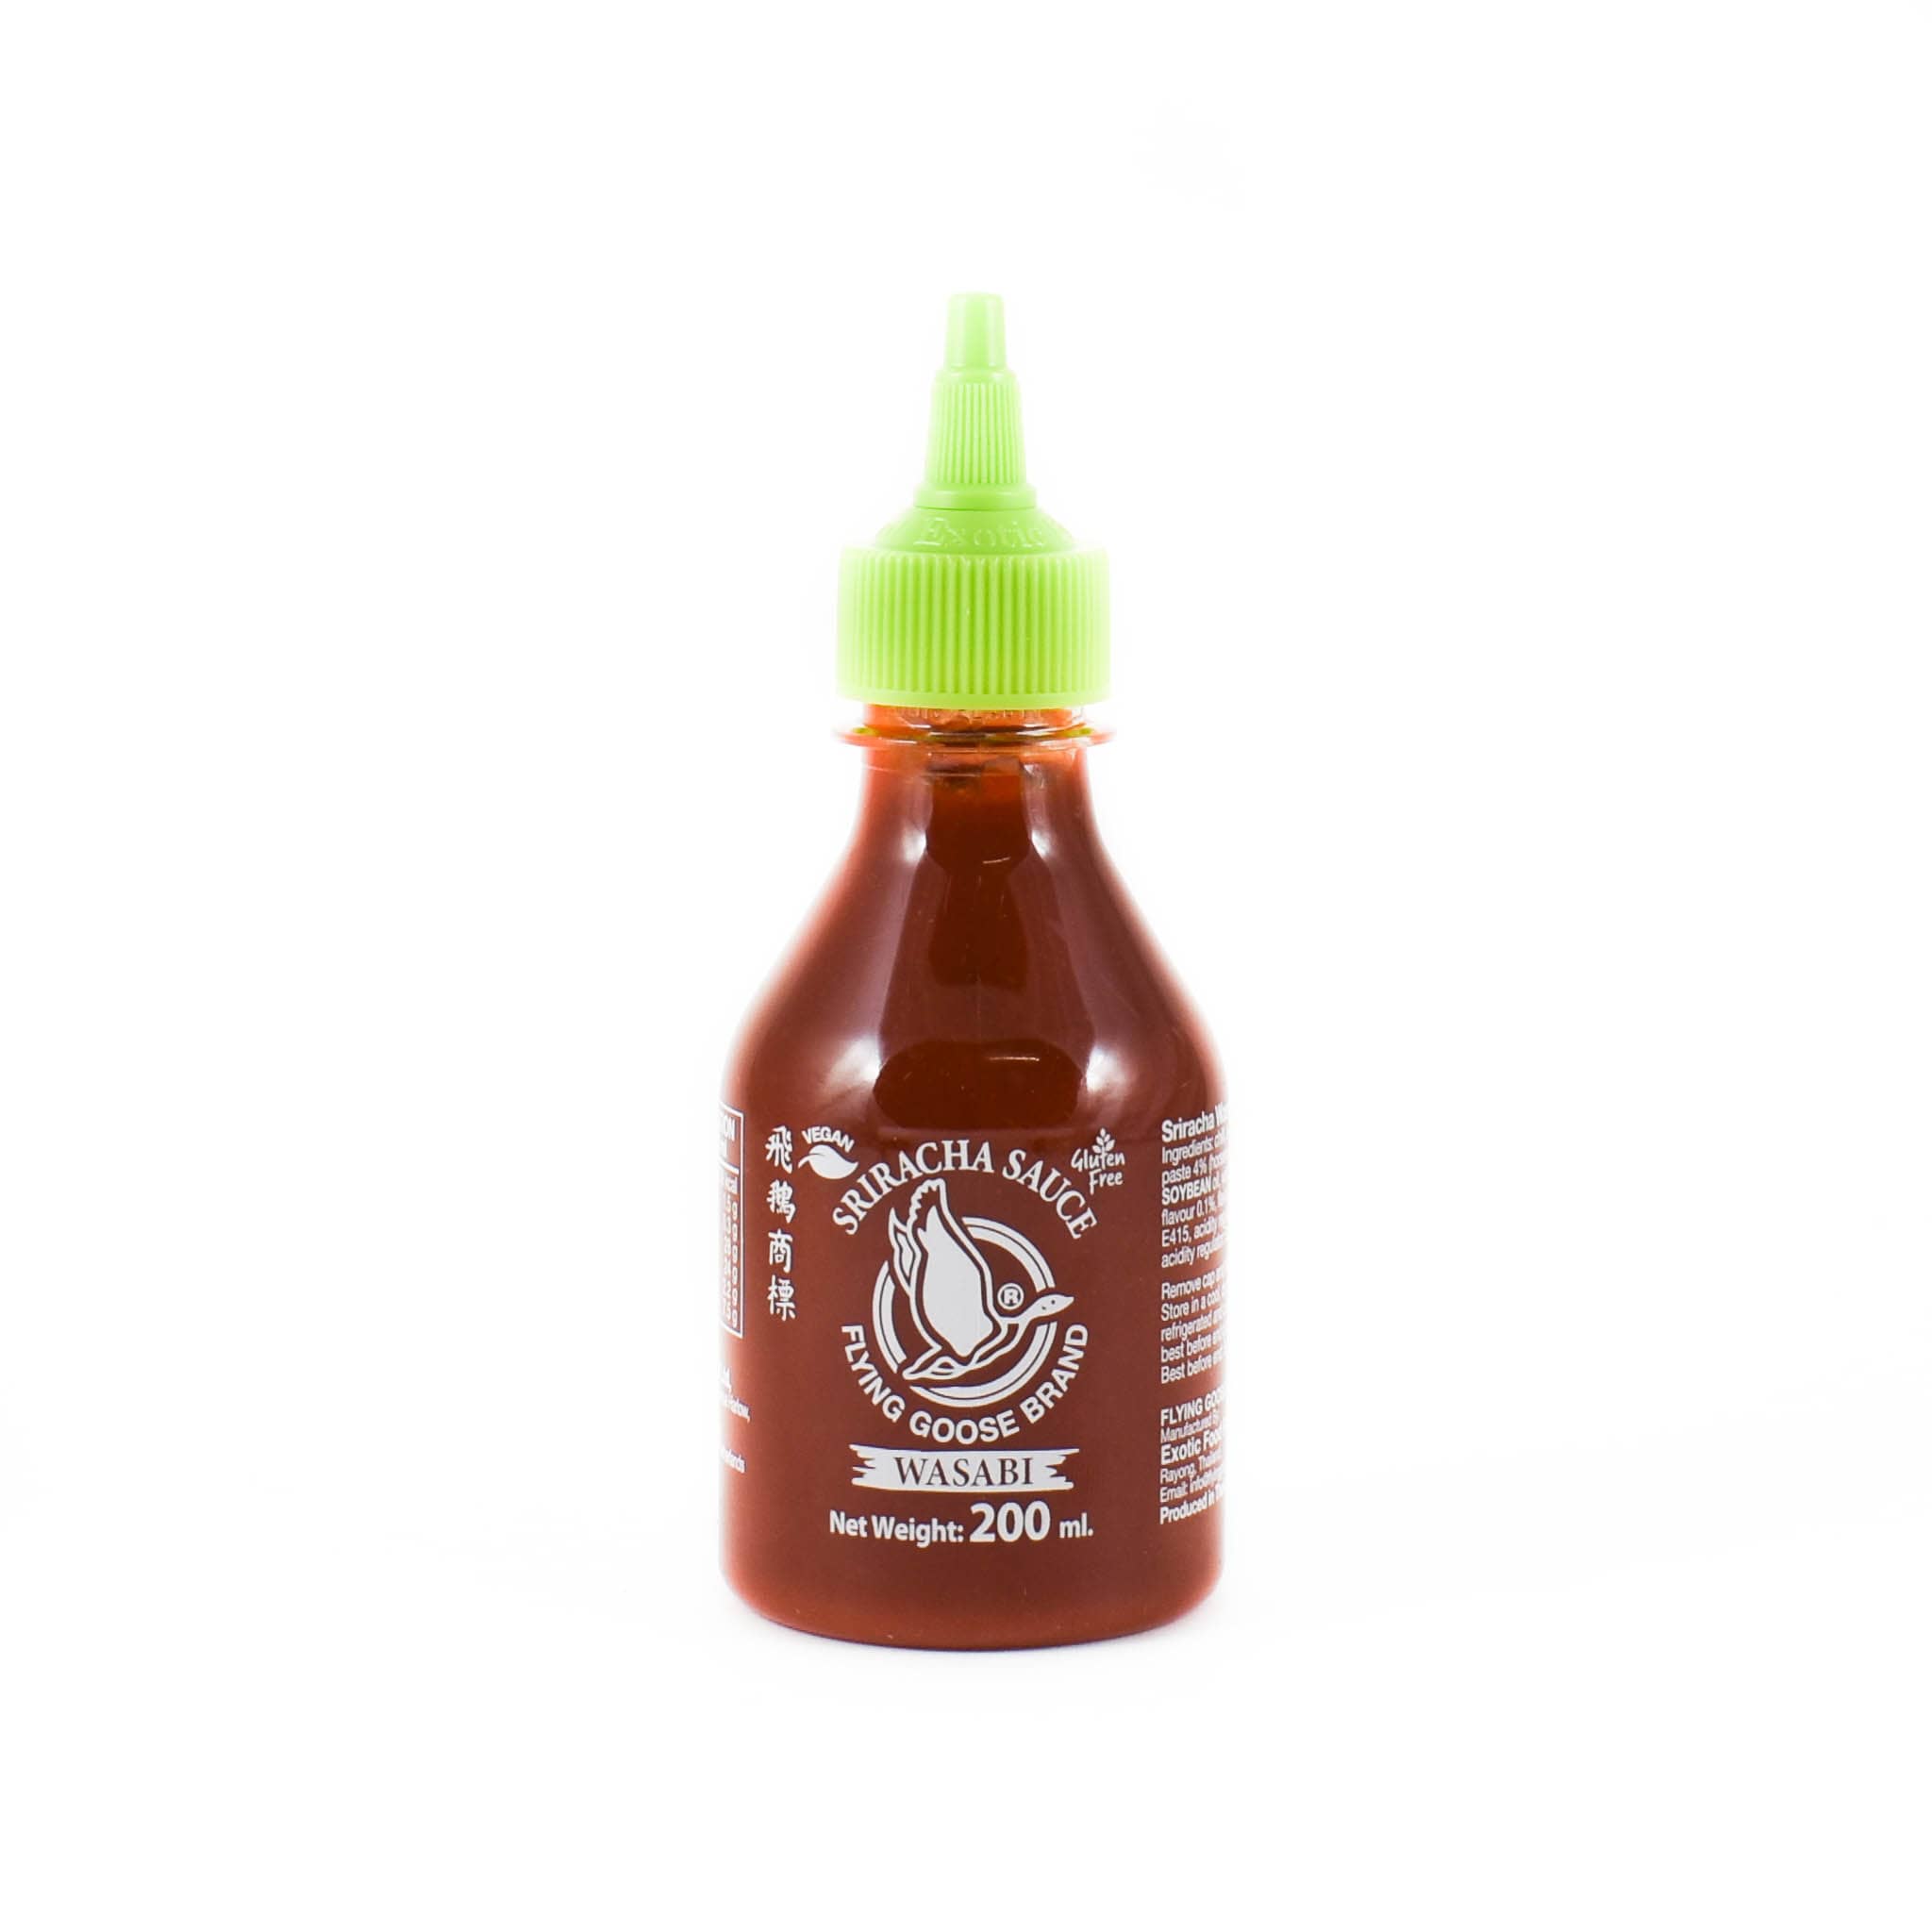 Flying Goose Sriracha Wasabi, 200ml